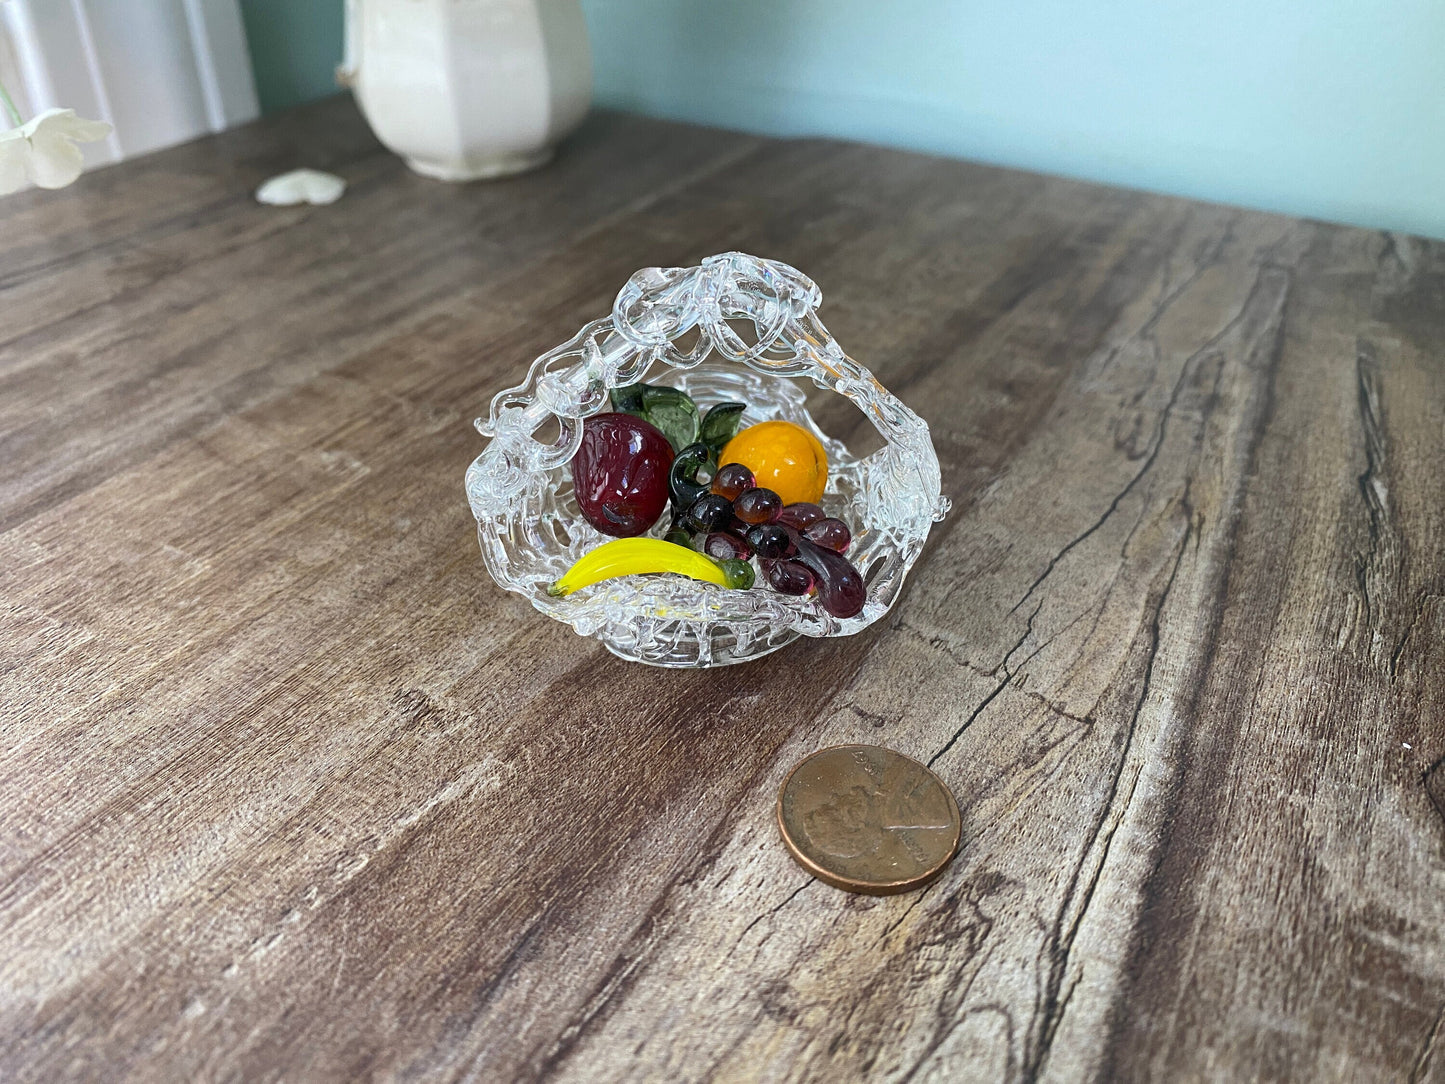 Vintage Spun Glass Basket with Fruit